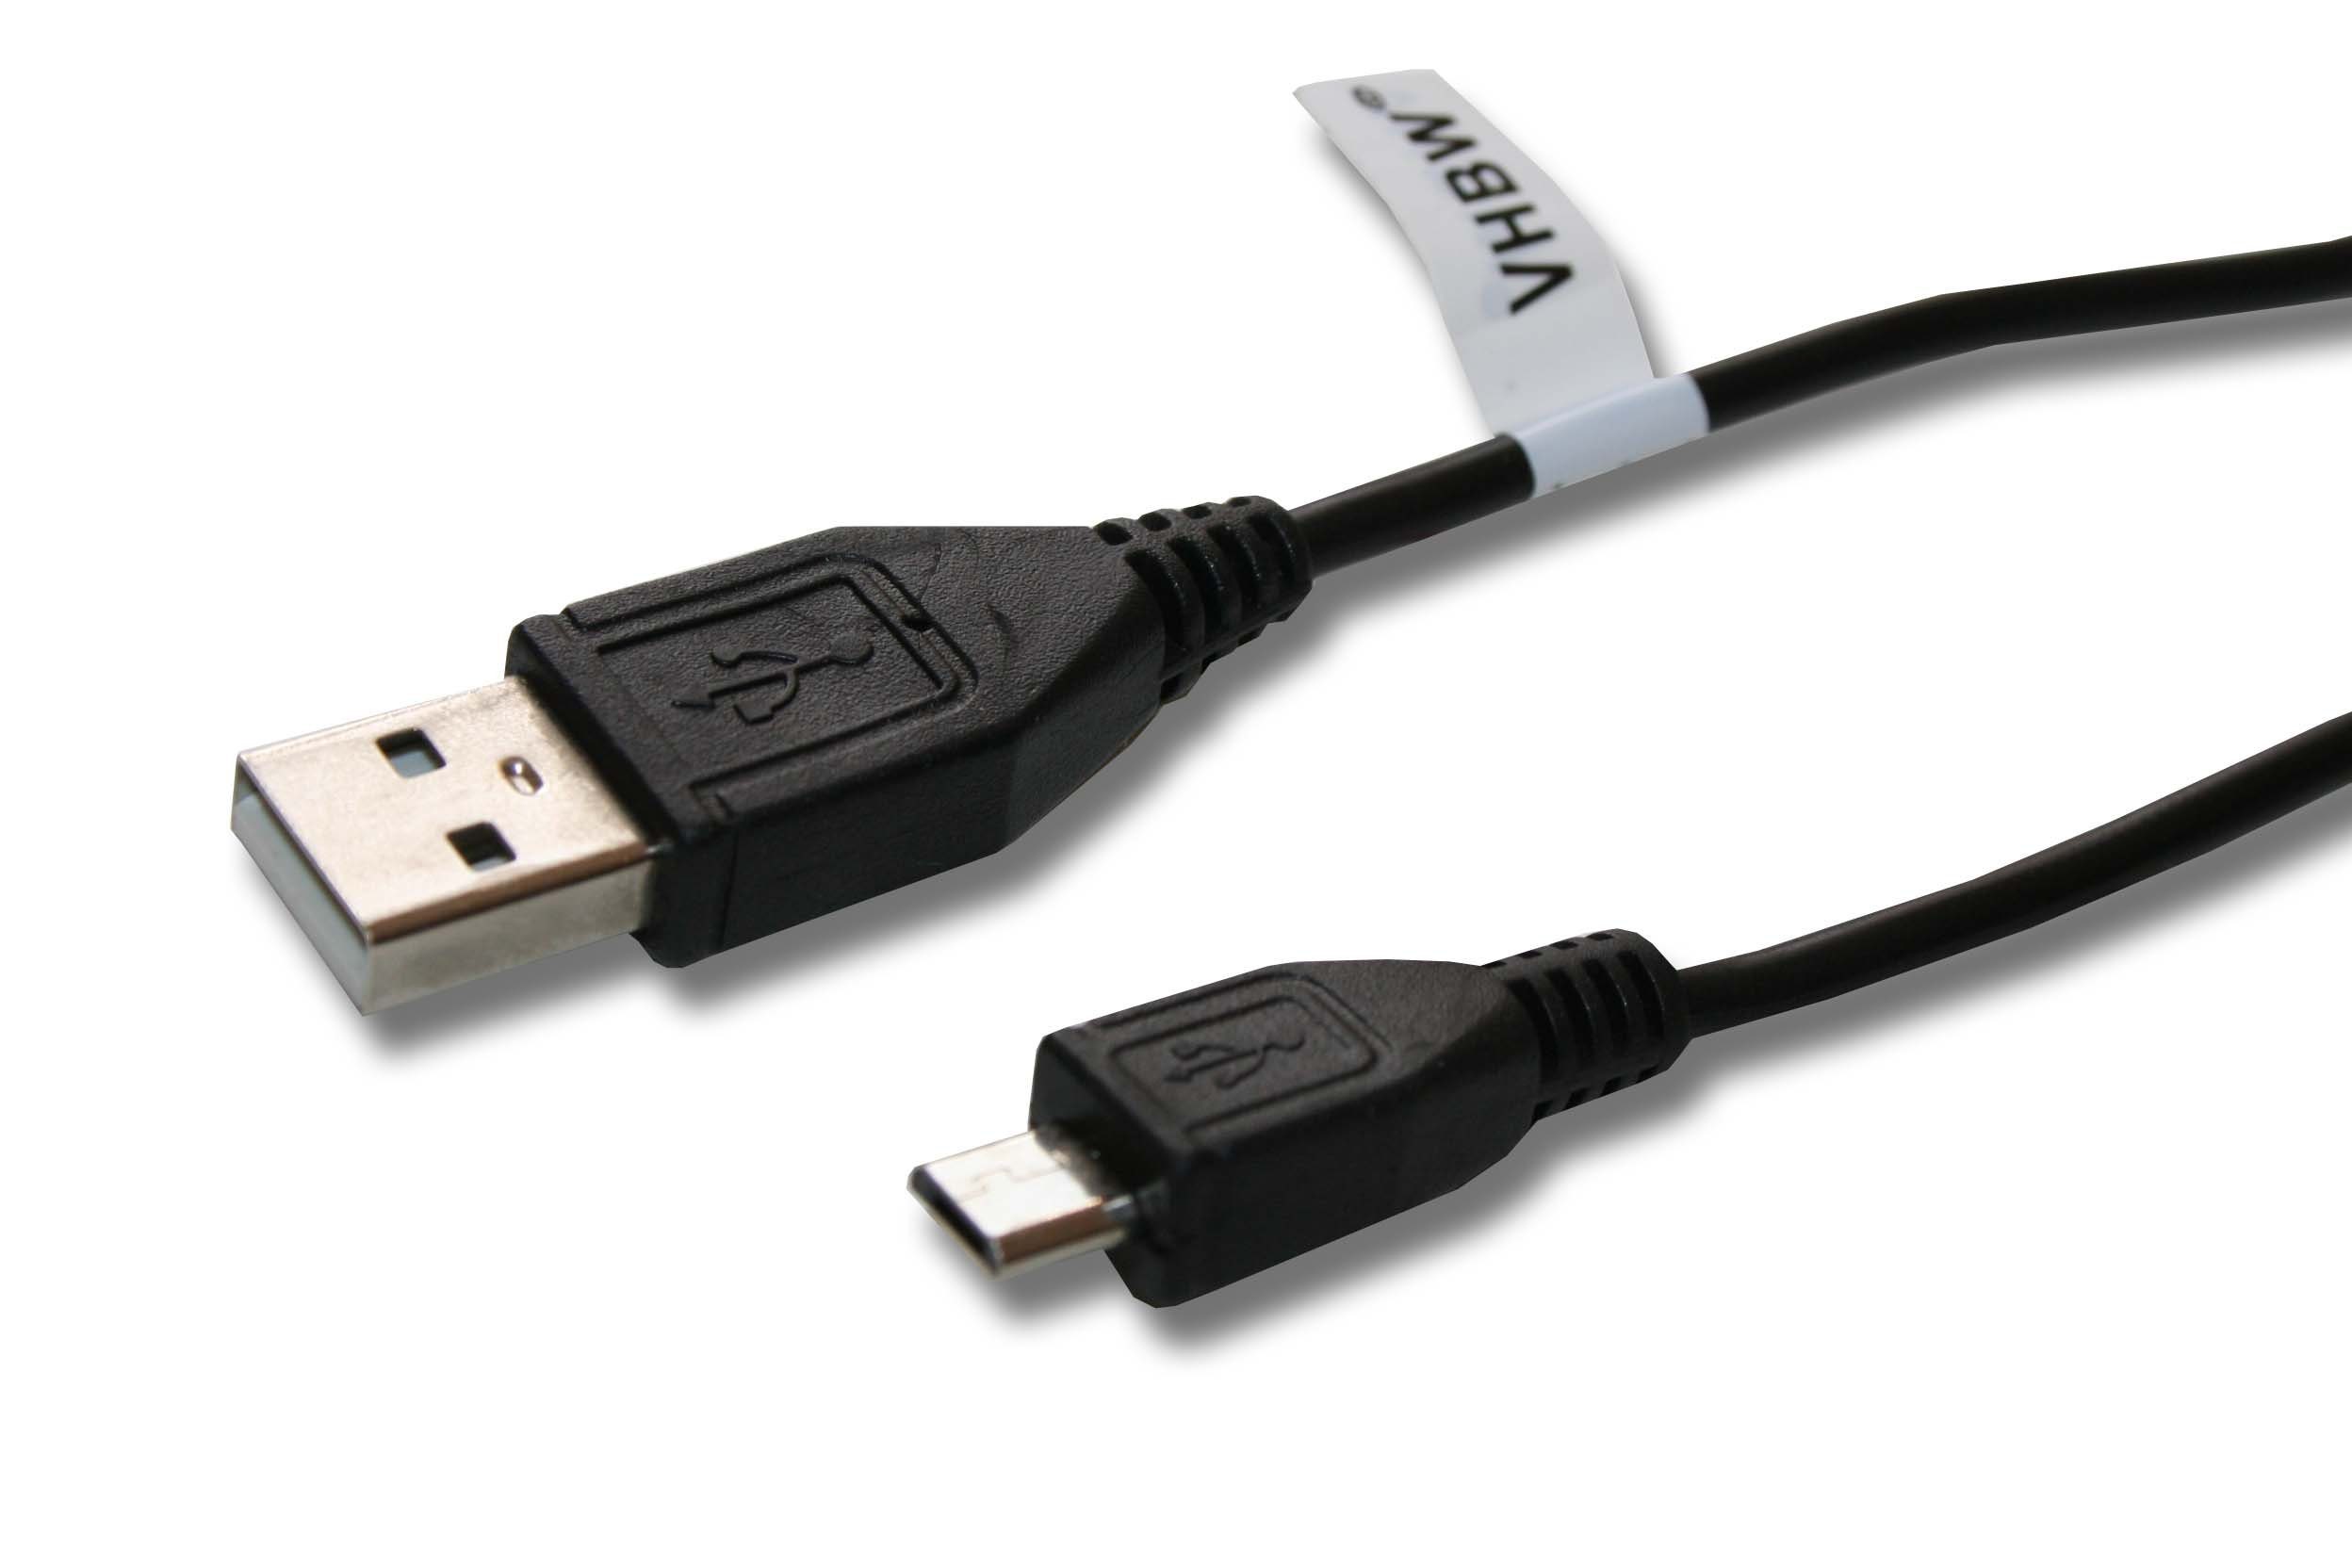 vhbw USB-Kabel, Micro-USB, passend für Sony HDR-AS20, HDR-AS200V, HDR-AS300, HDR-AS15, HDR-AS30 Kamera